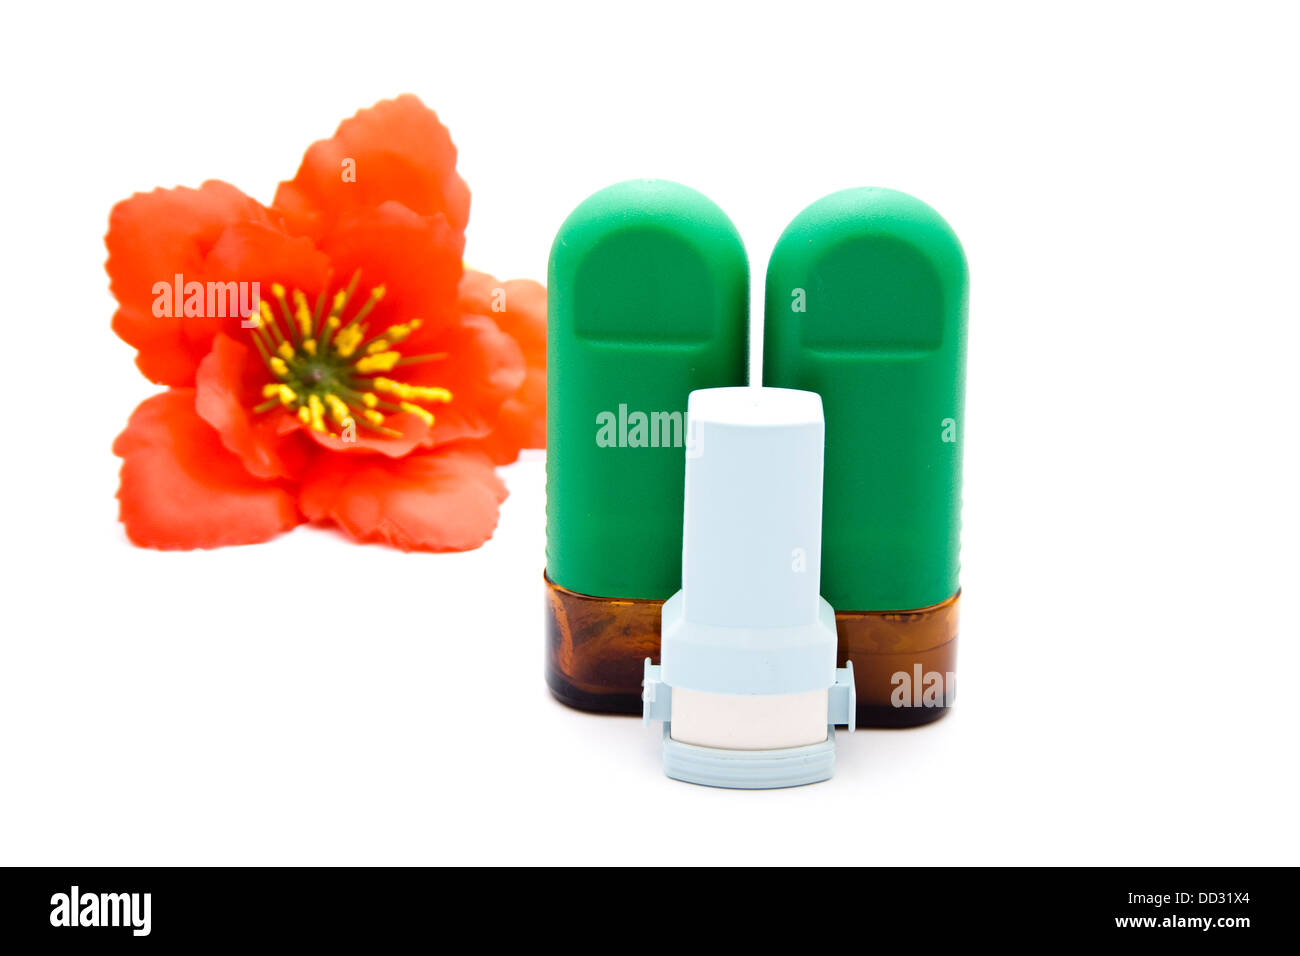 Vicks inhaler nasal stick retail pack Stock Photo - Alamy